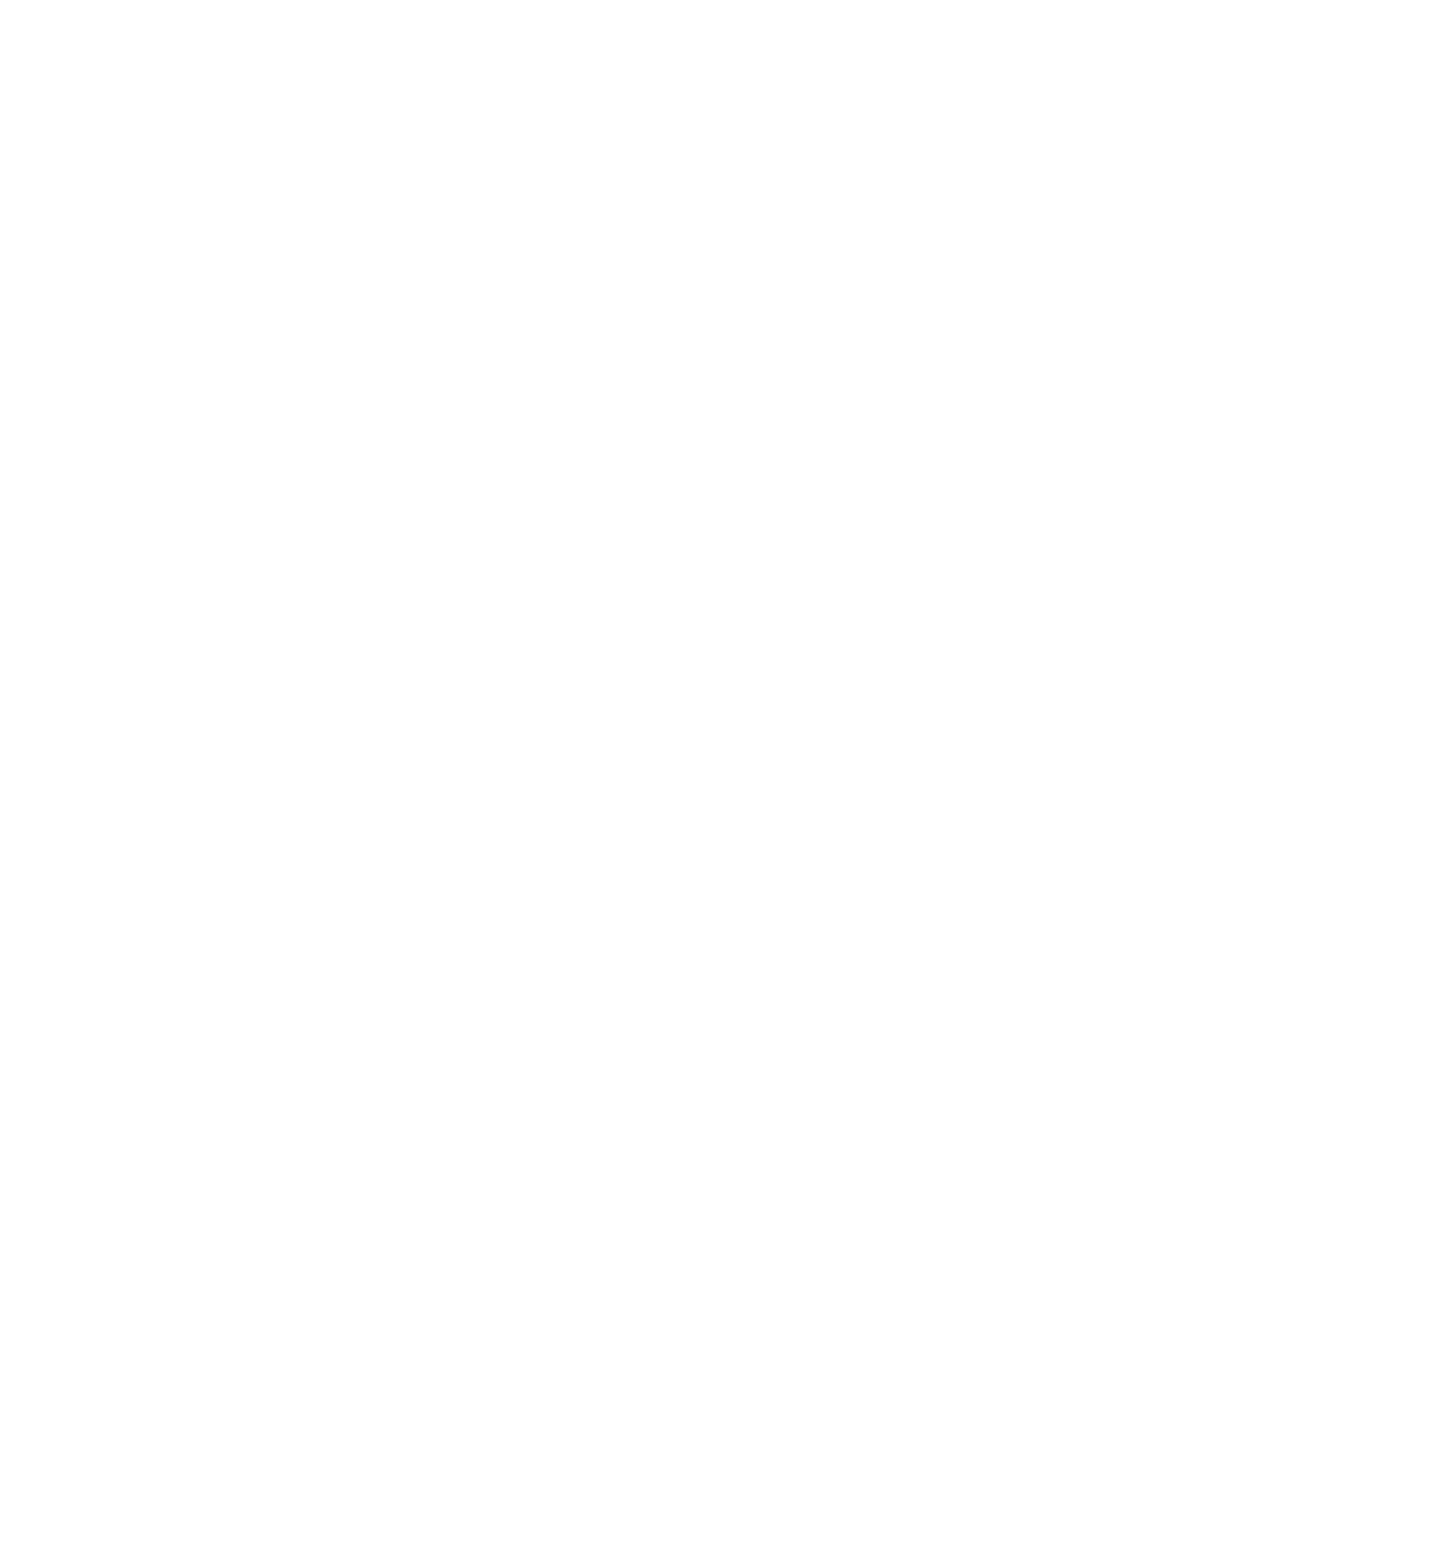 Abu Dhabi Commercial Bank (ADCB) logo for dark backgrounds (transparent PNG)